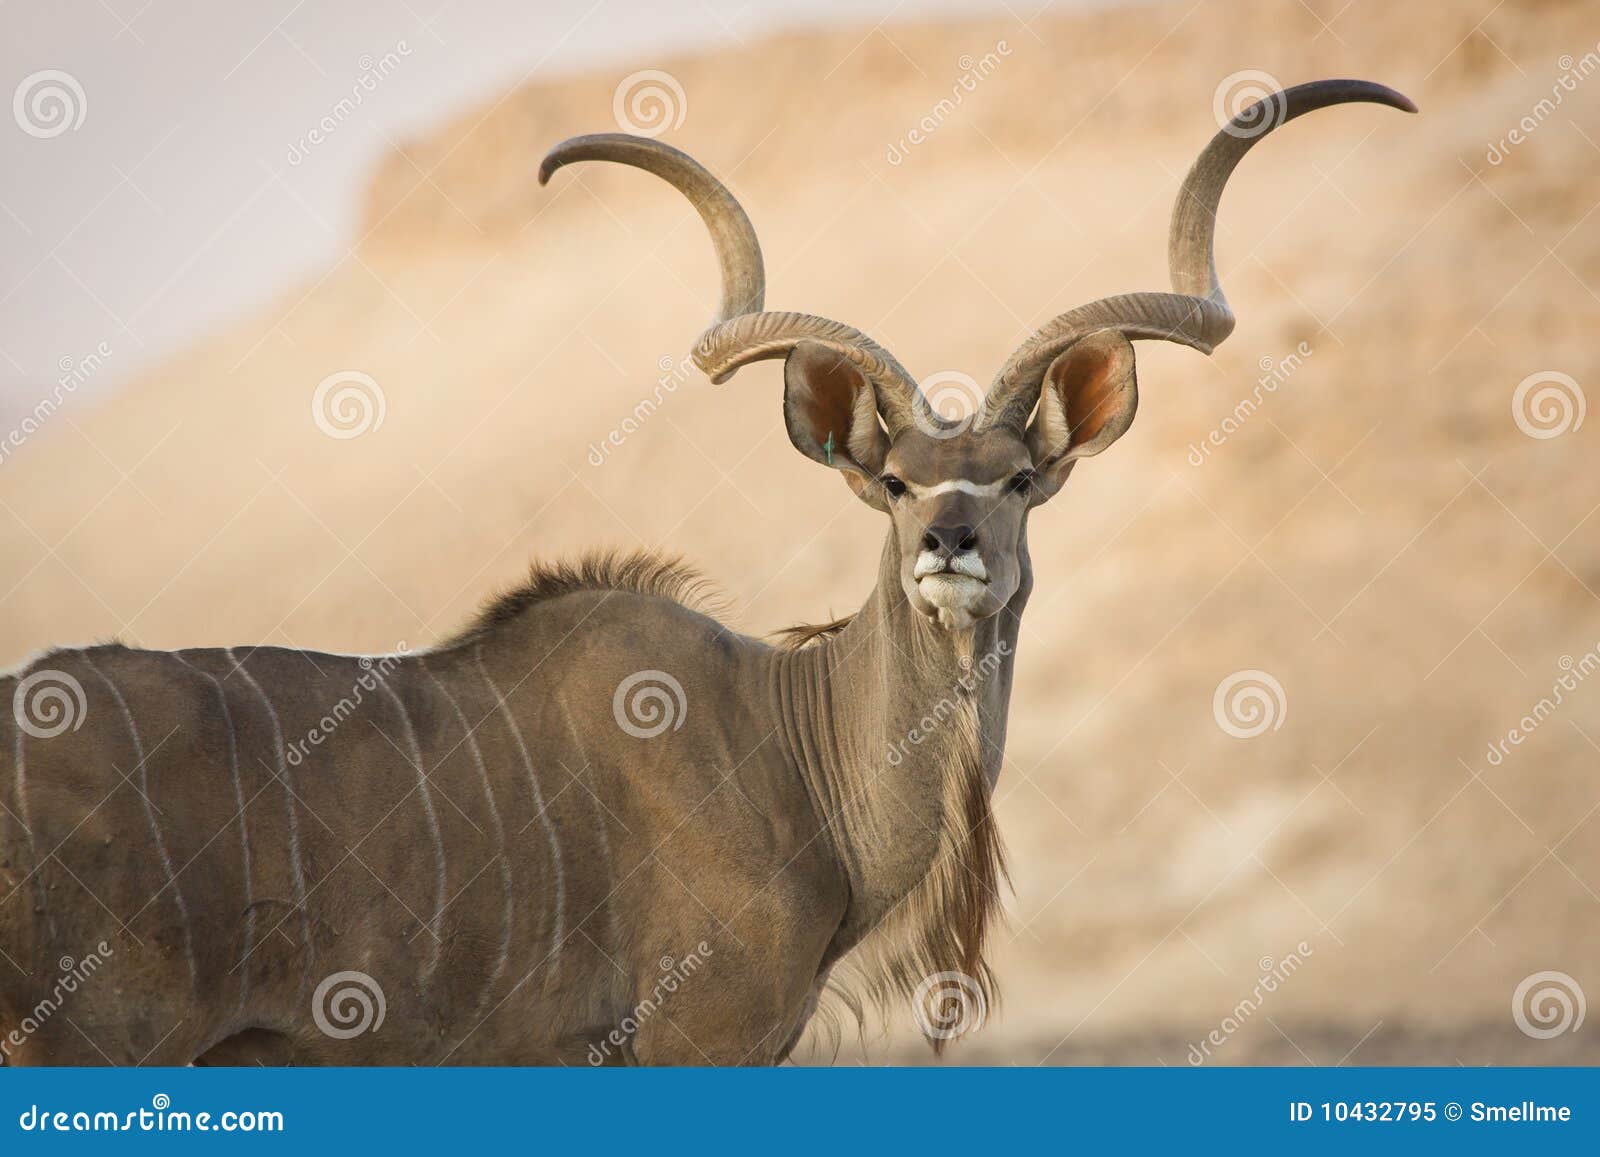 kudu portrait